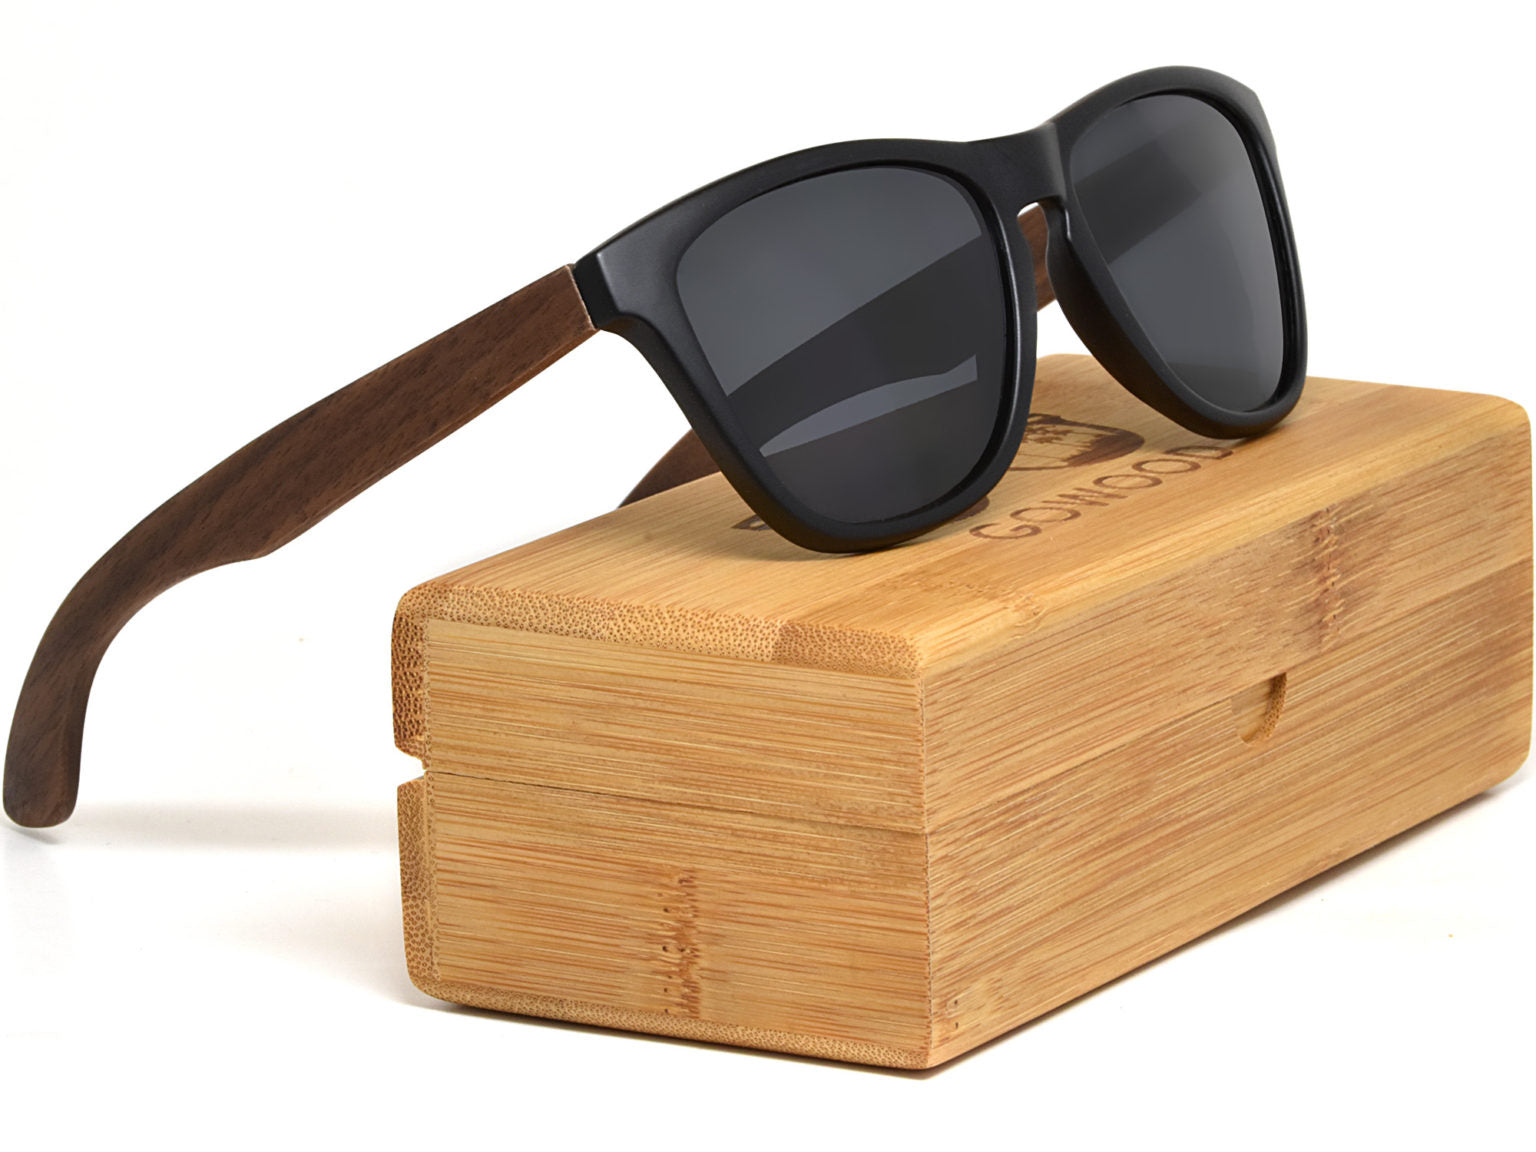 Walnut wood classic style sunglasses with Black polarized lenses